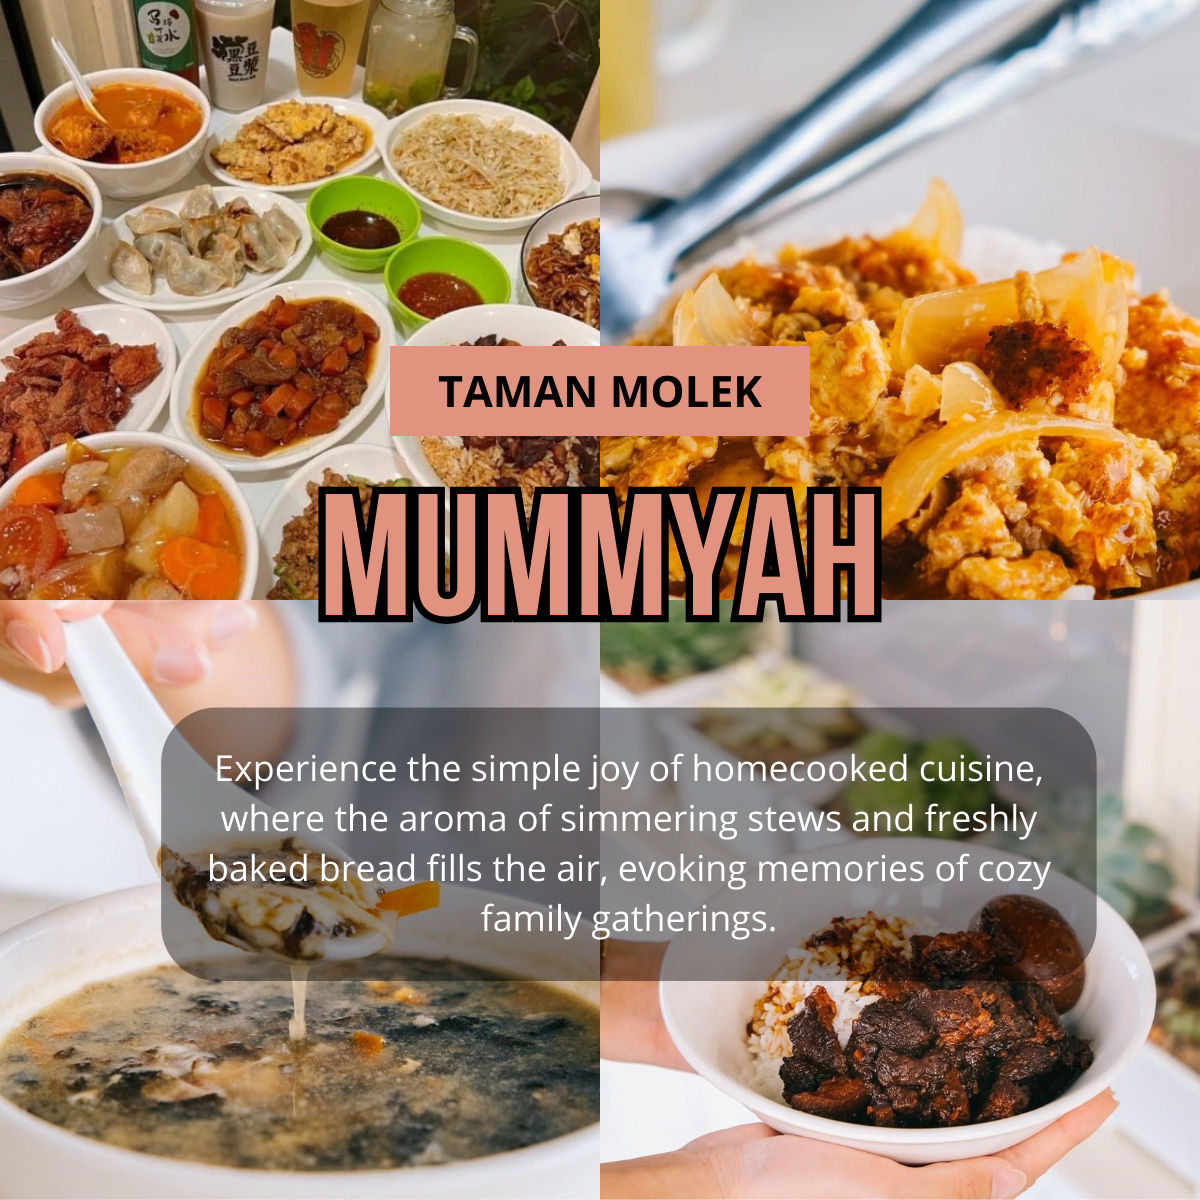 Mummyah Cafe: A Cozy Corner of Nostalgia in Molek, Johor Bahru